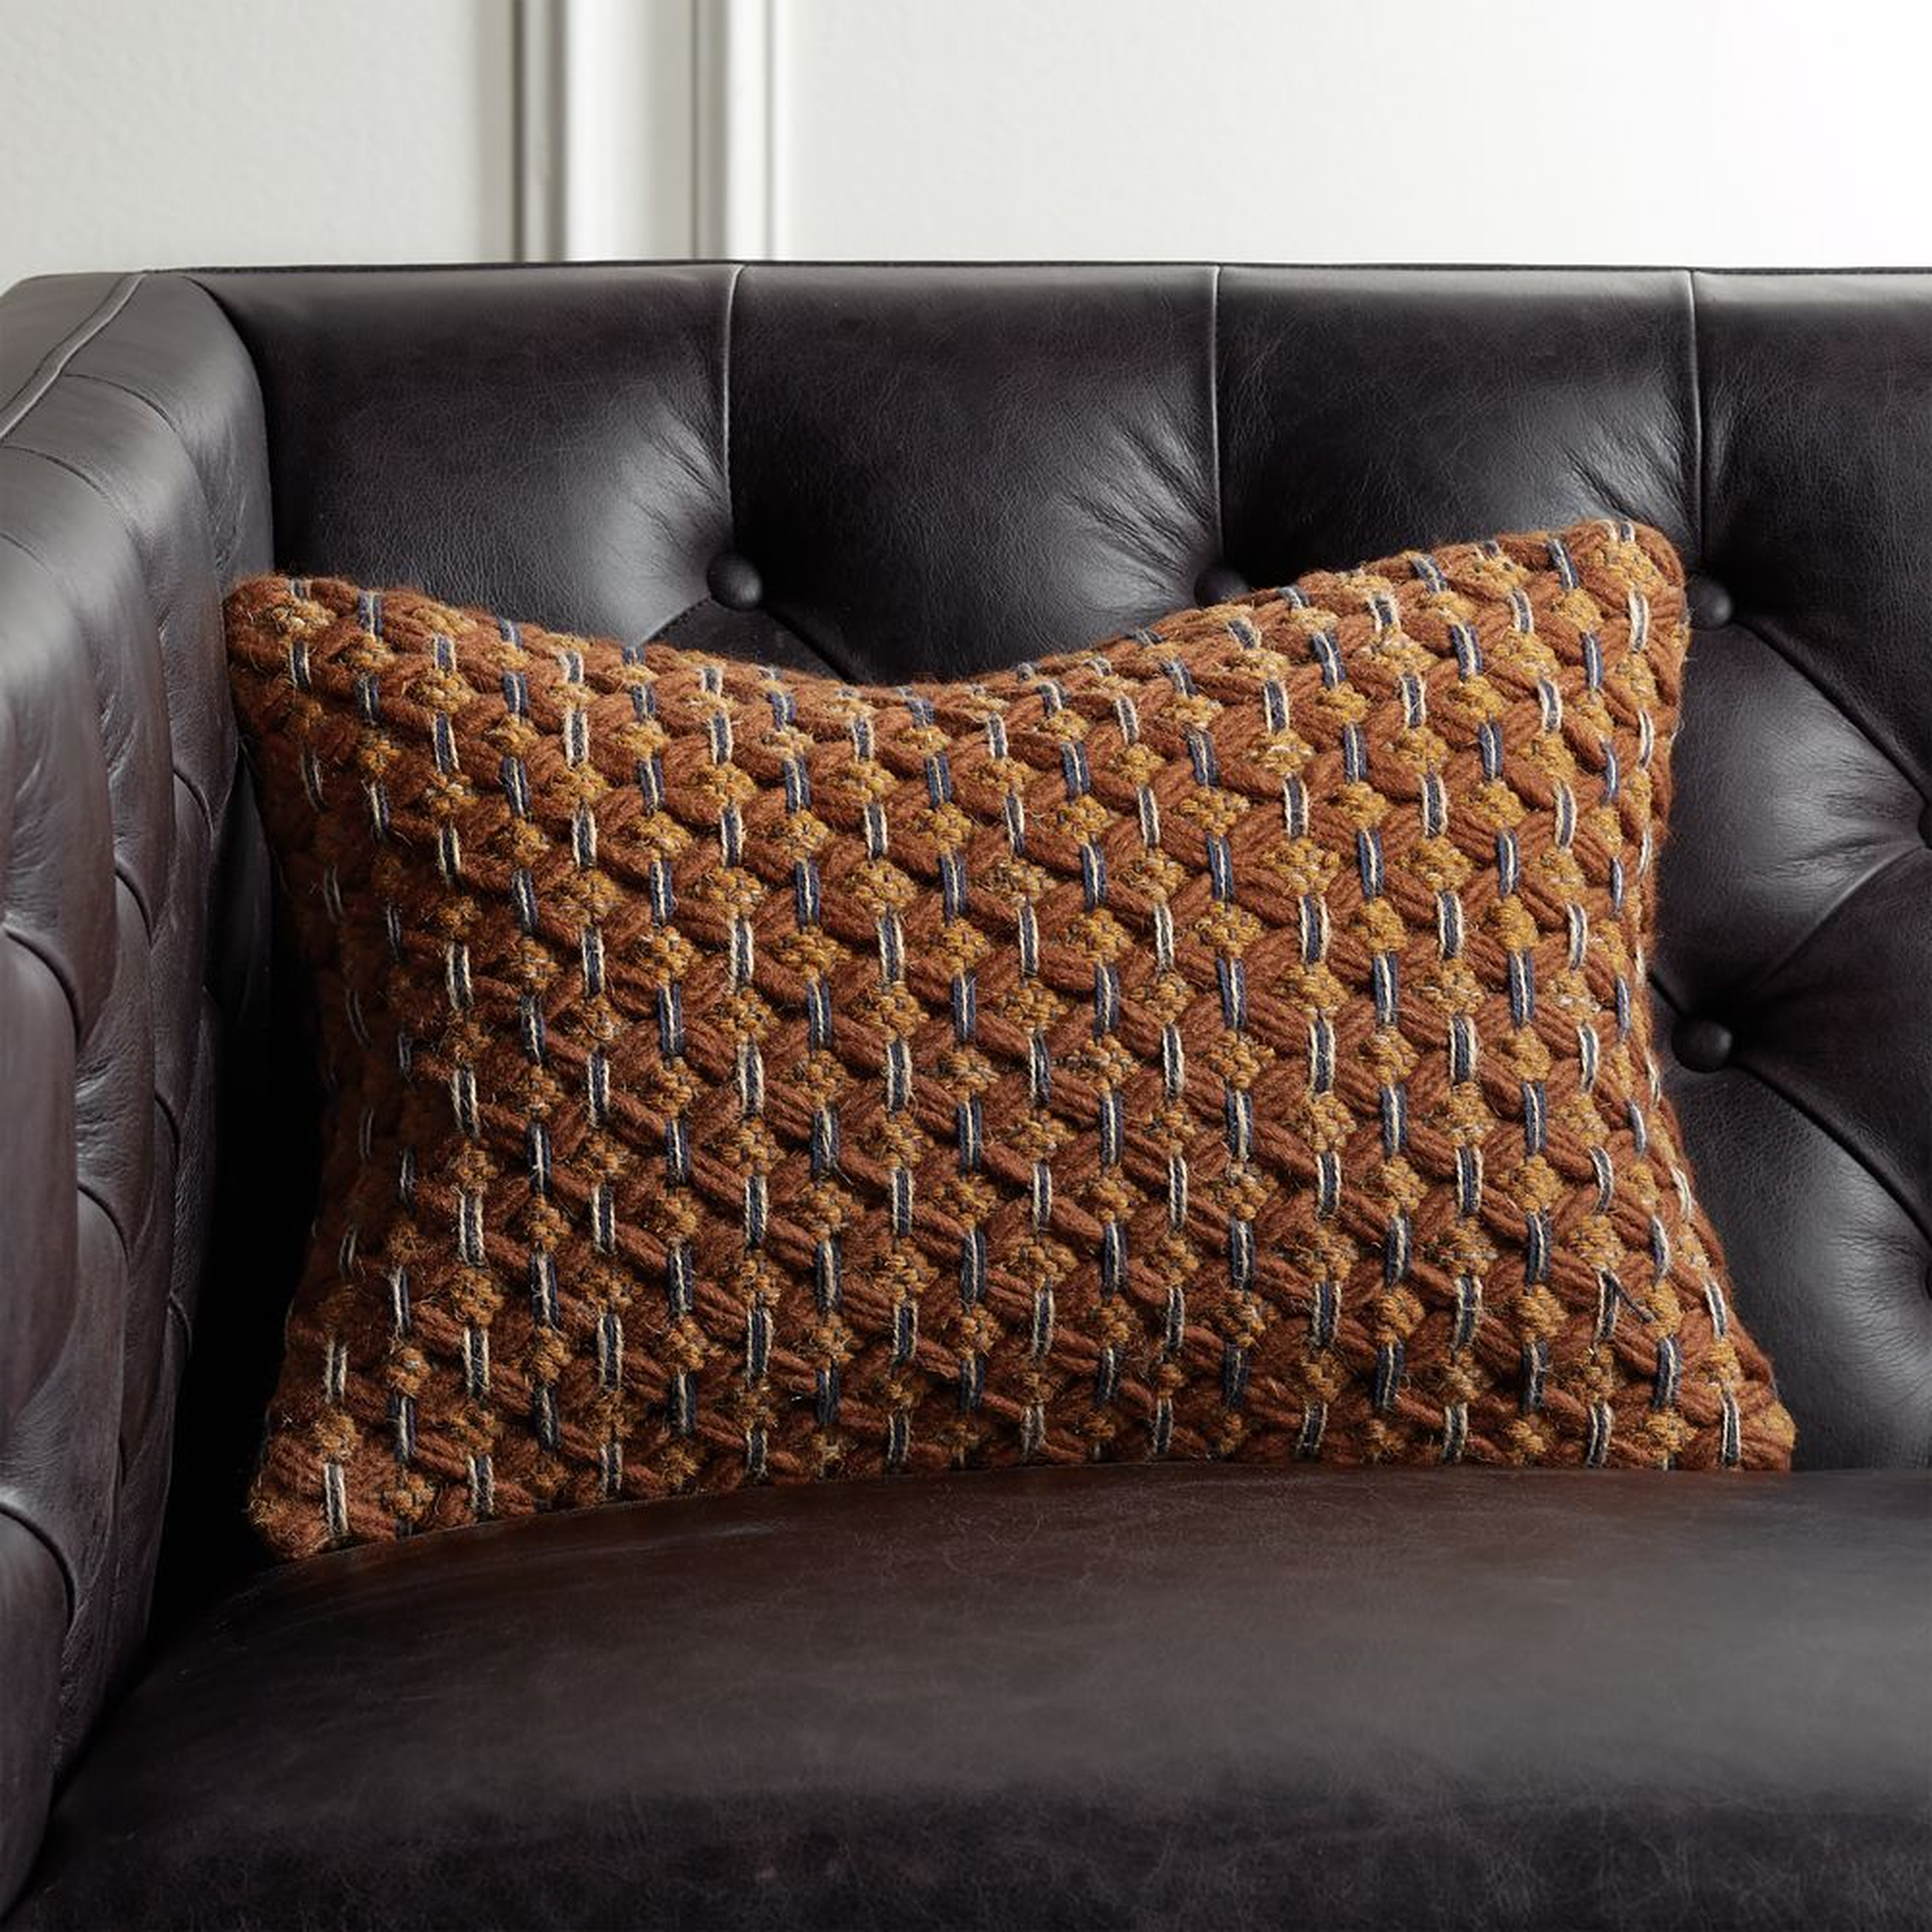 18"x12" Geema Copper Woven Pillow with Down-Alternative Insert - CB2